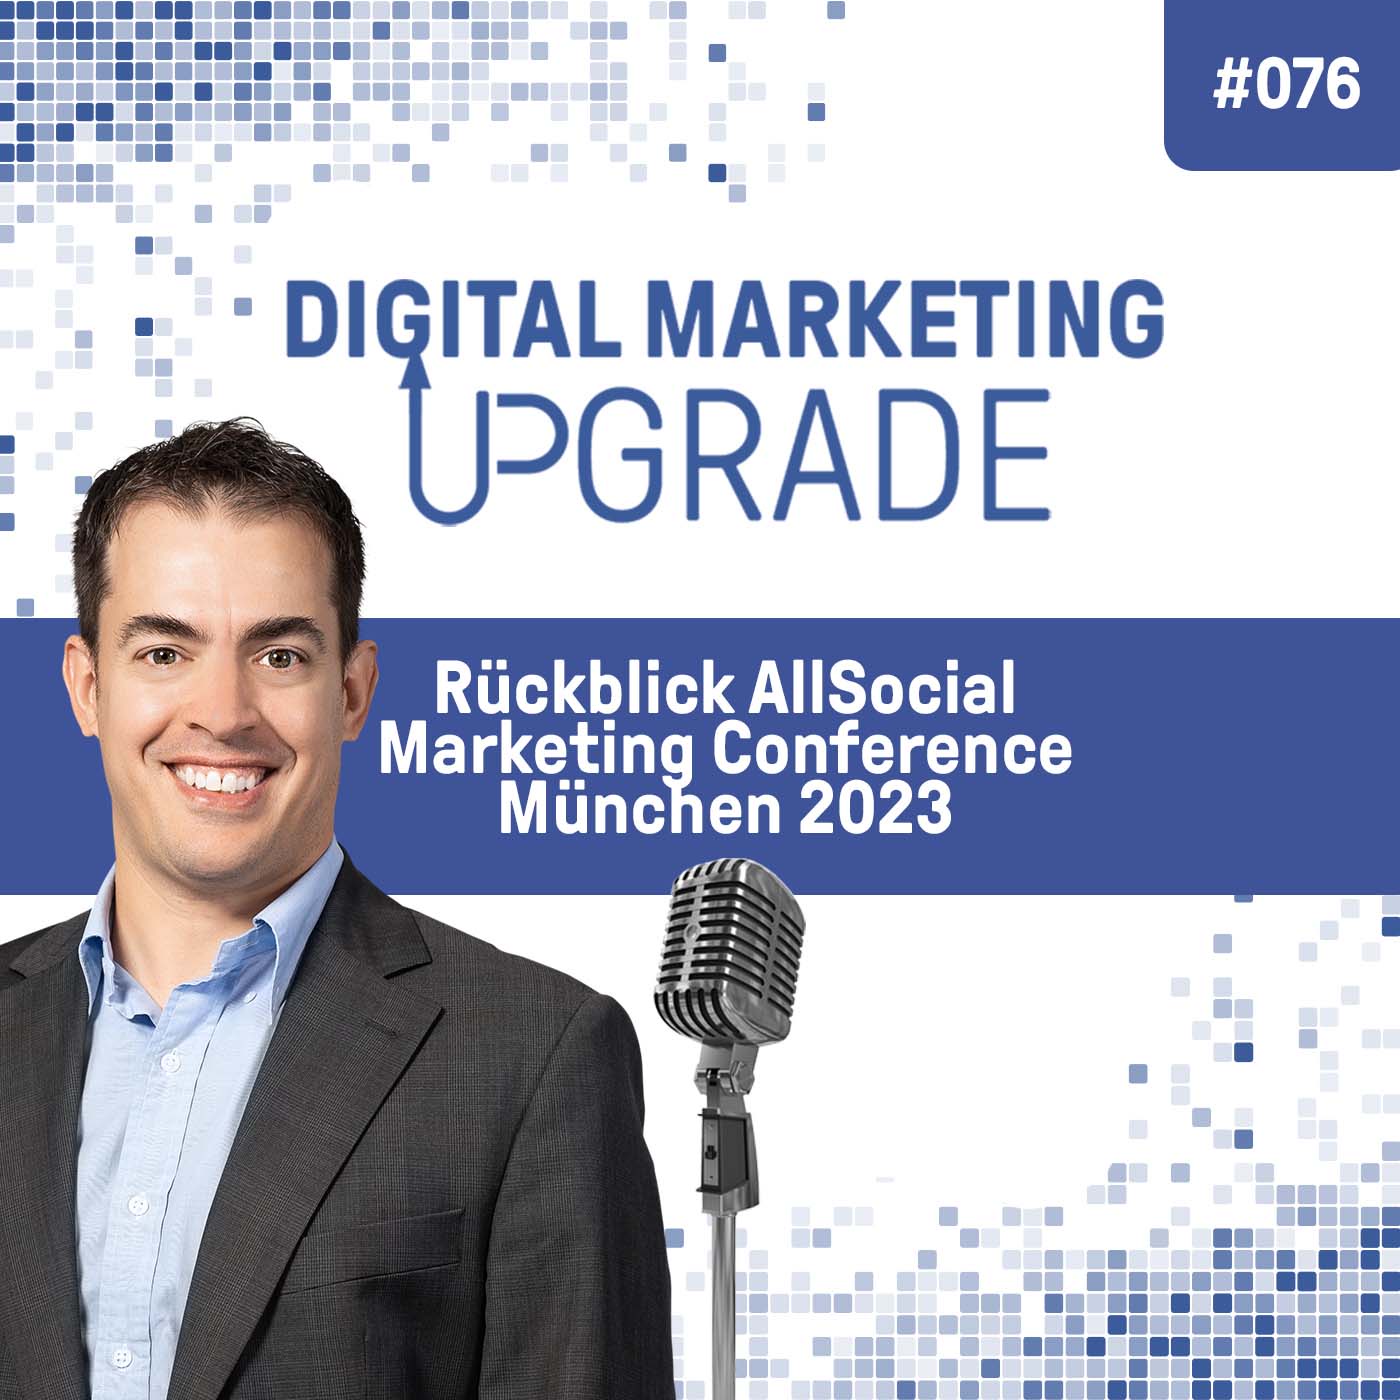 Rückblick AllSocial Marketing Conference - München 2023 #076